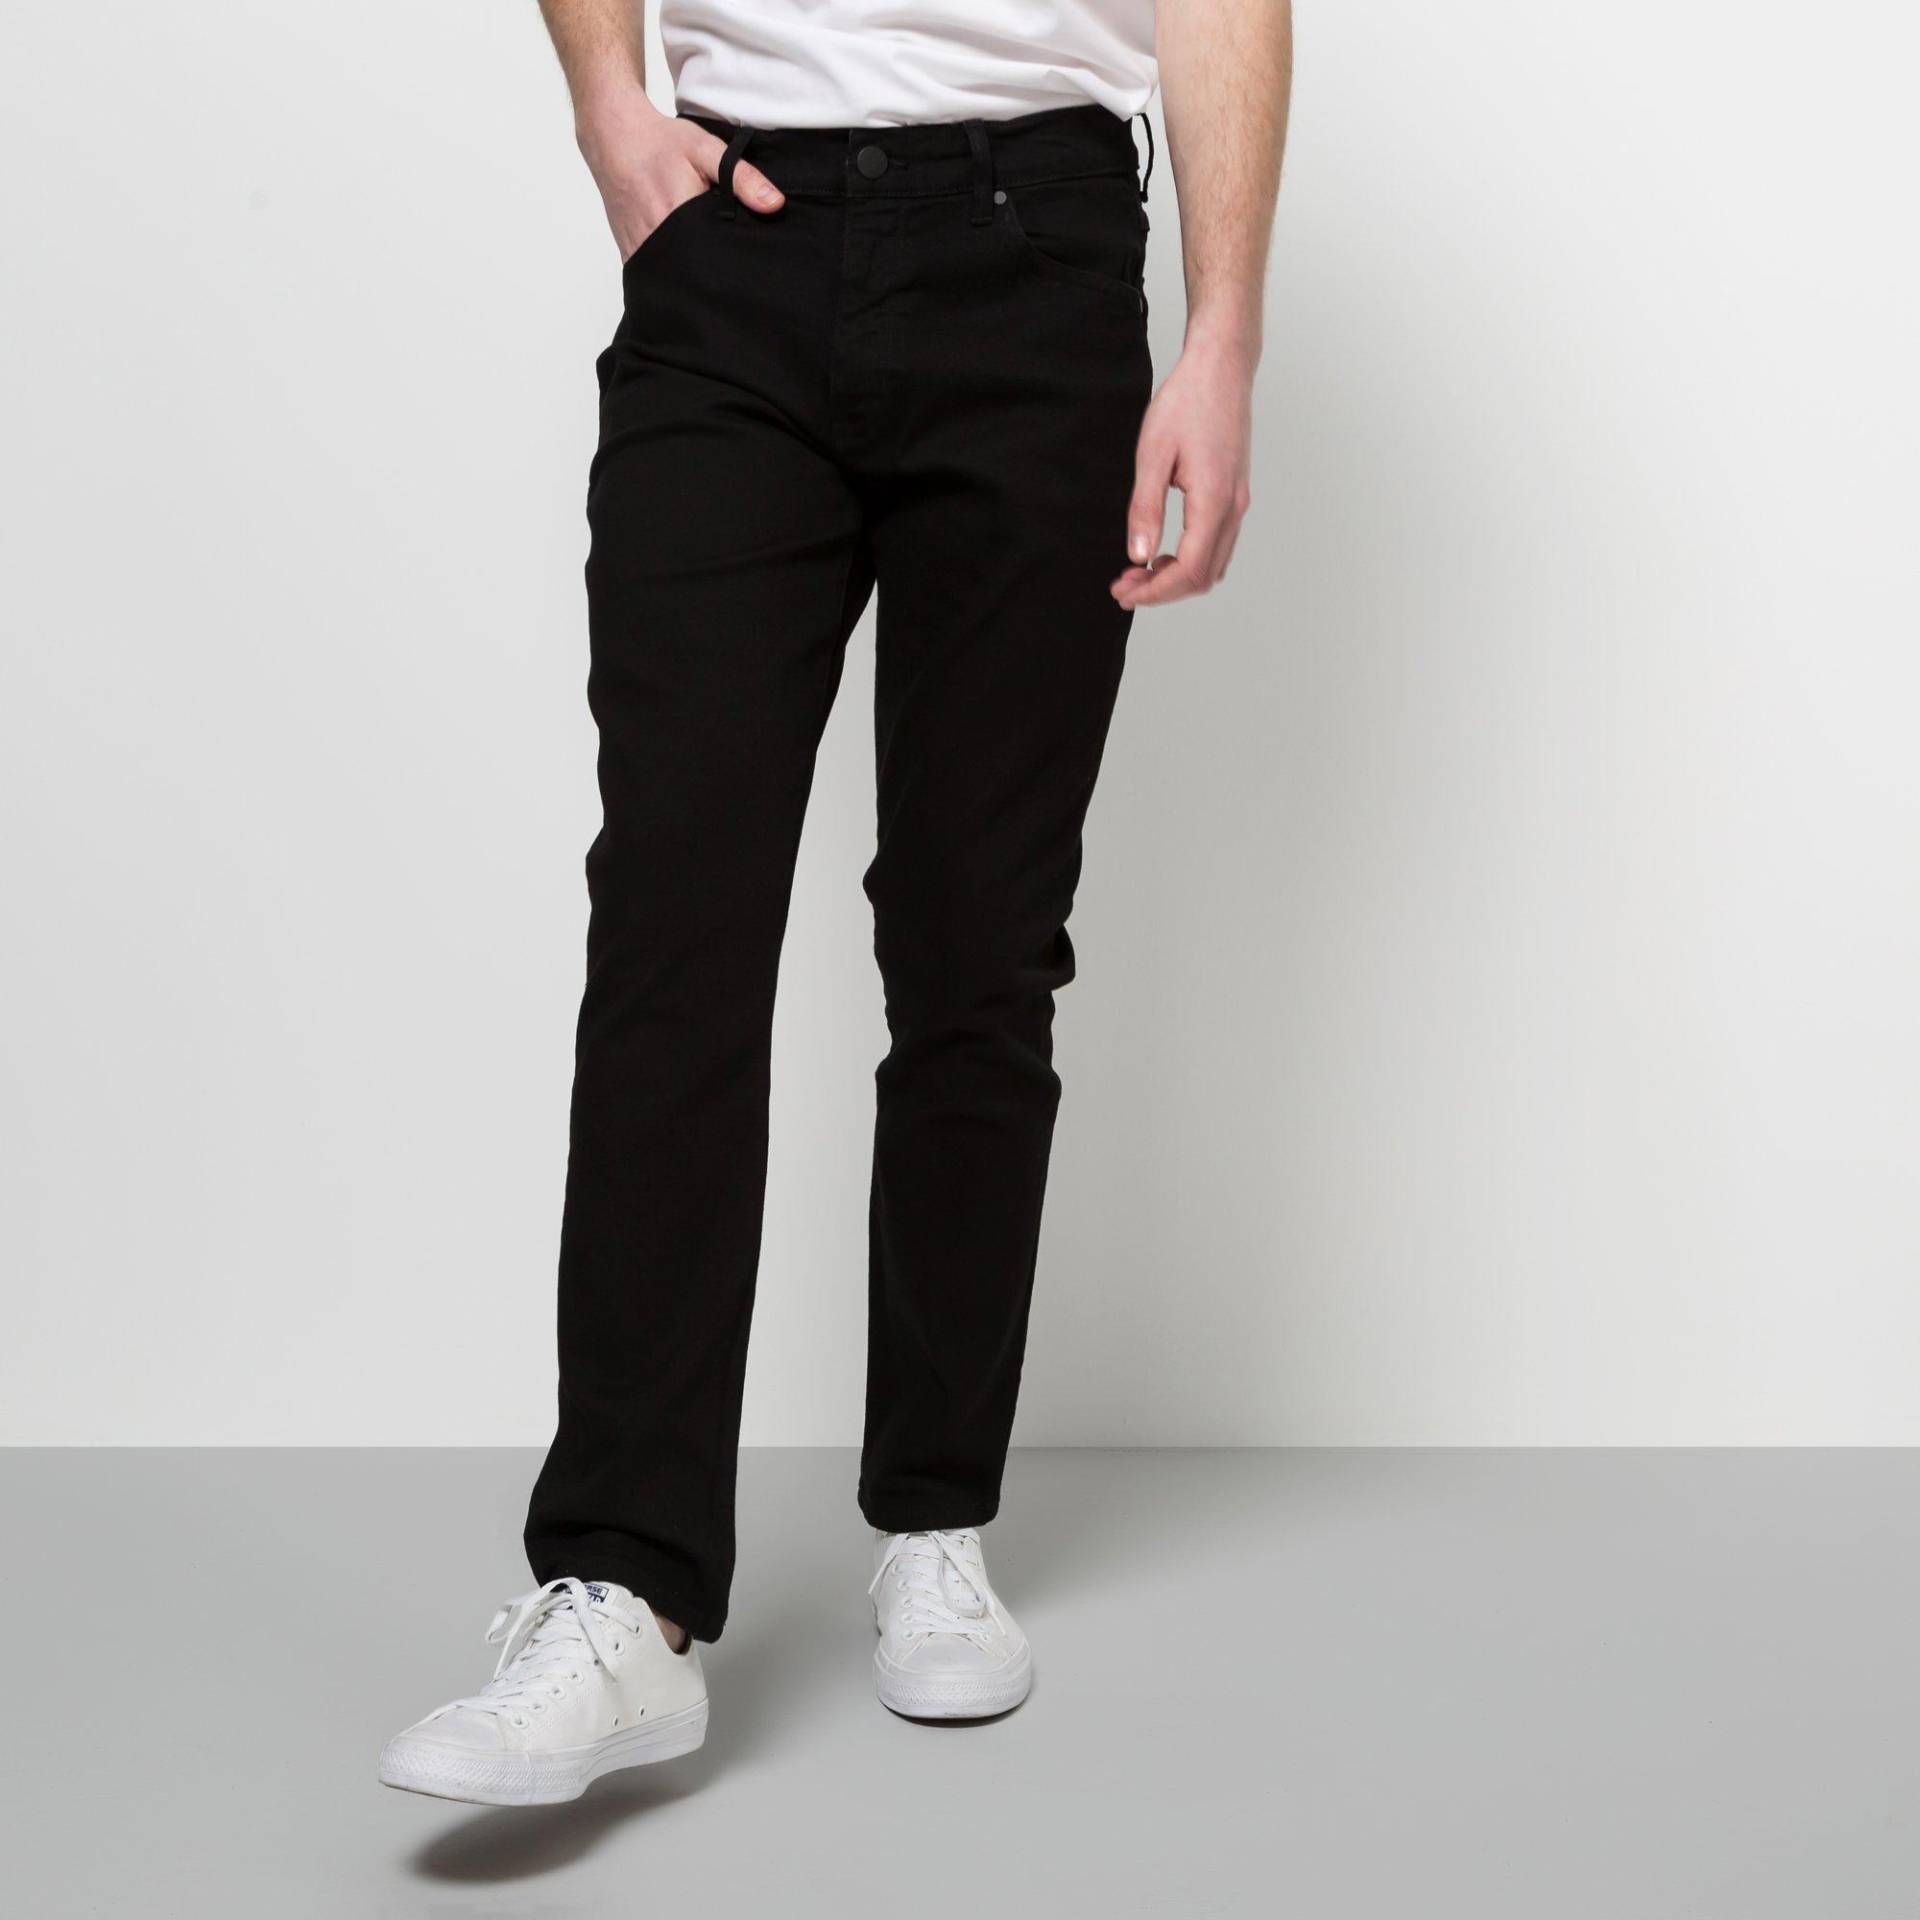 Jeans, Slim Fit Herren Black L32/W31 von Wrangler